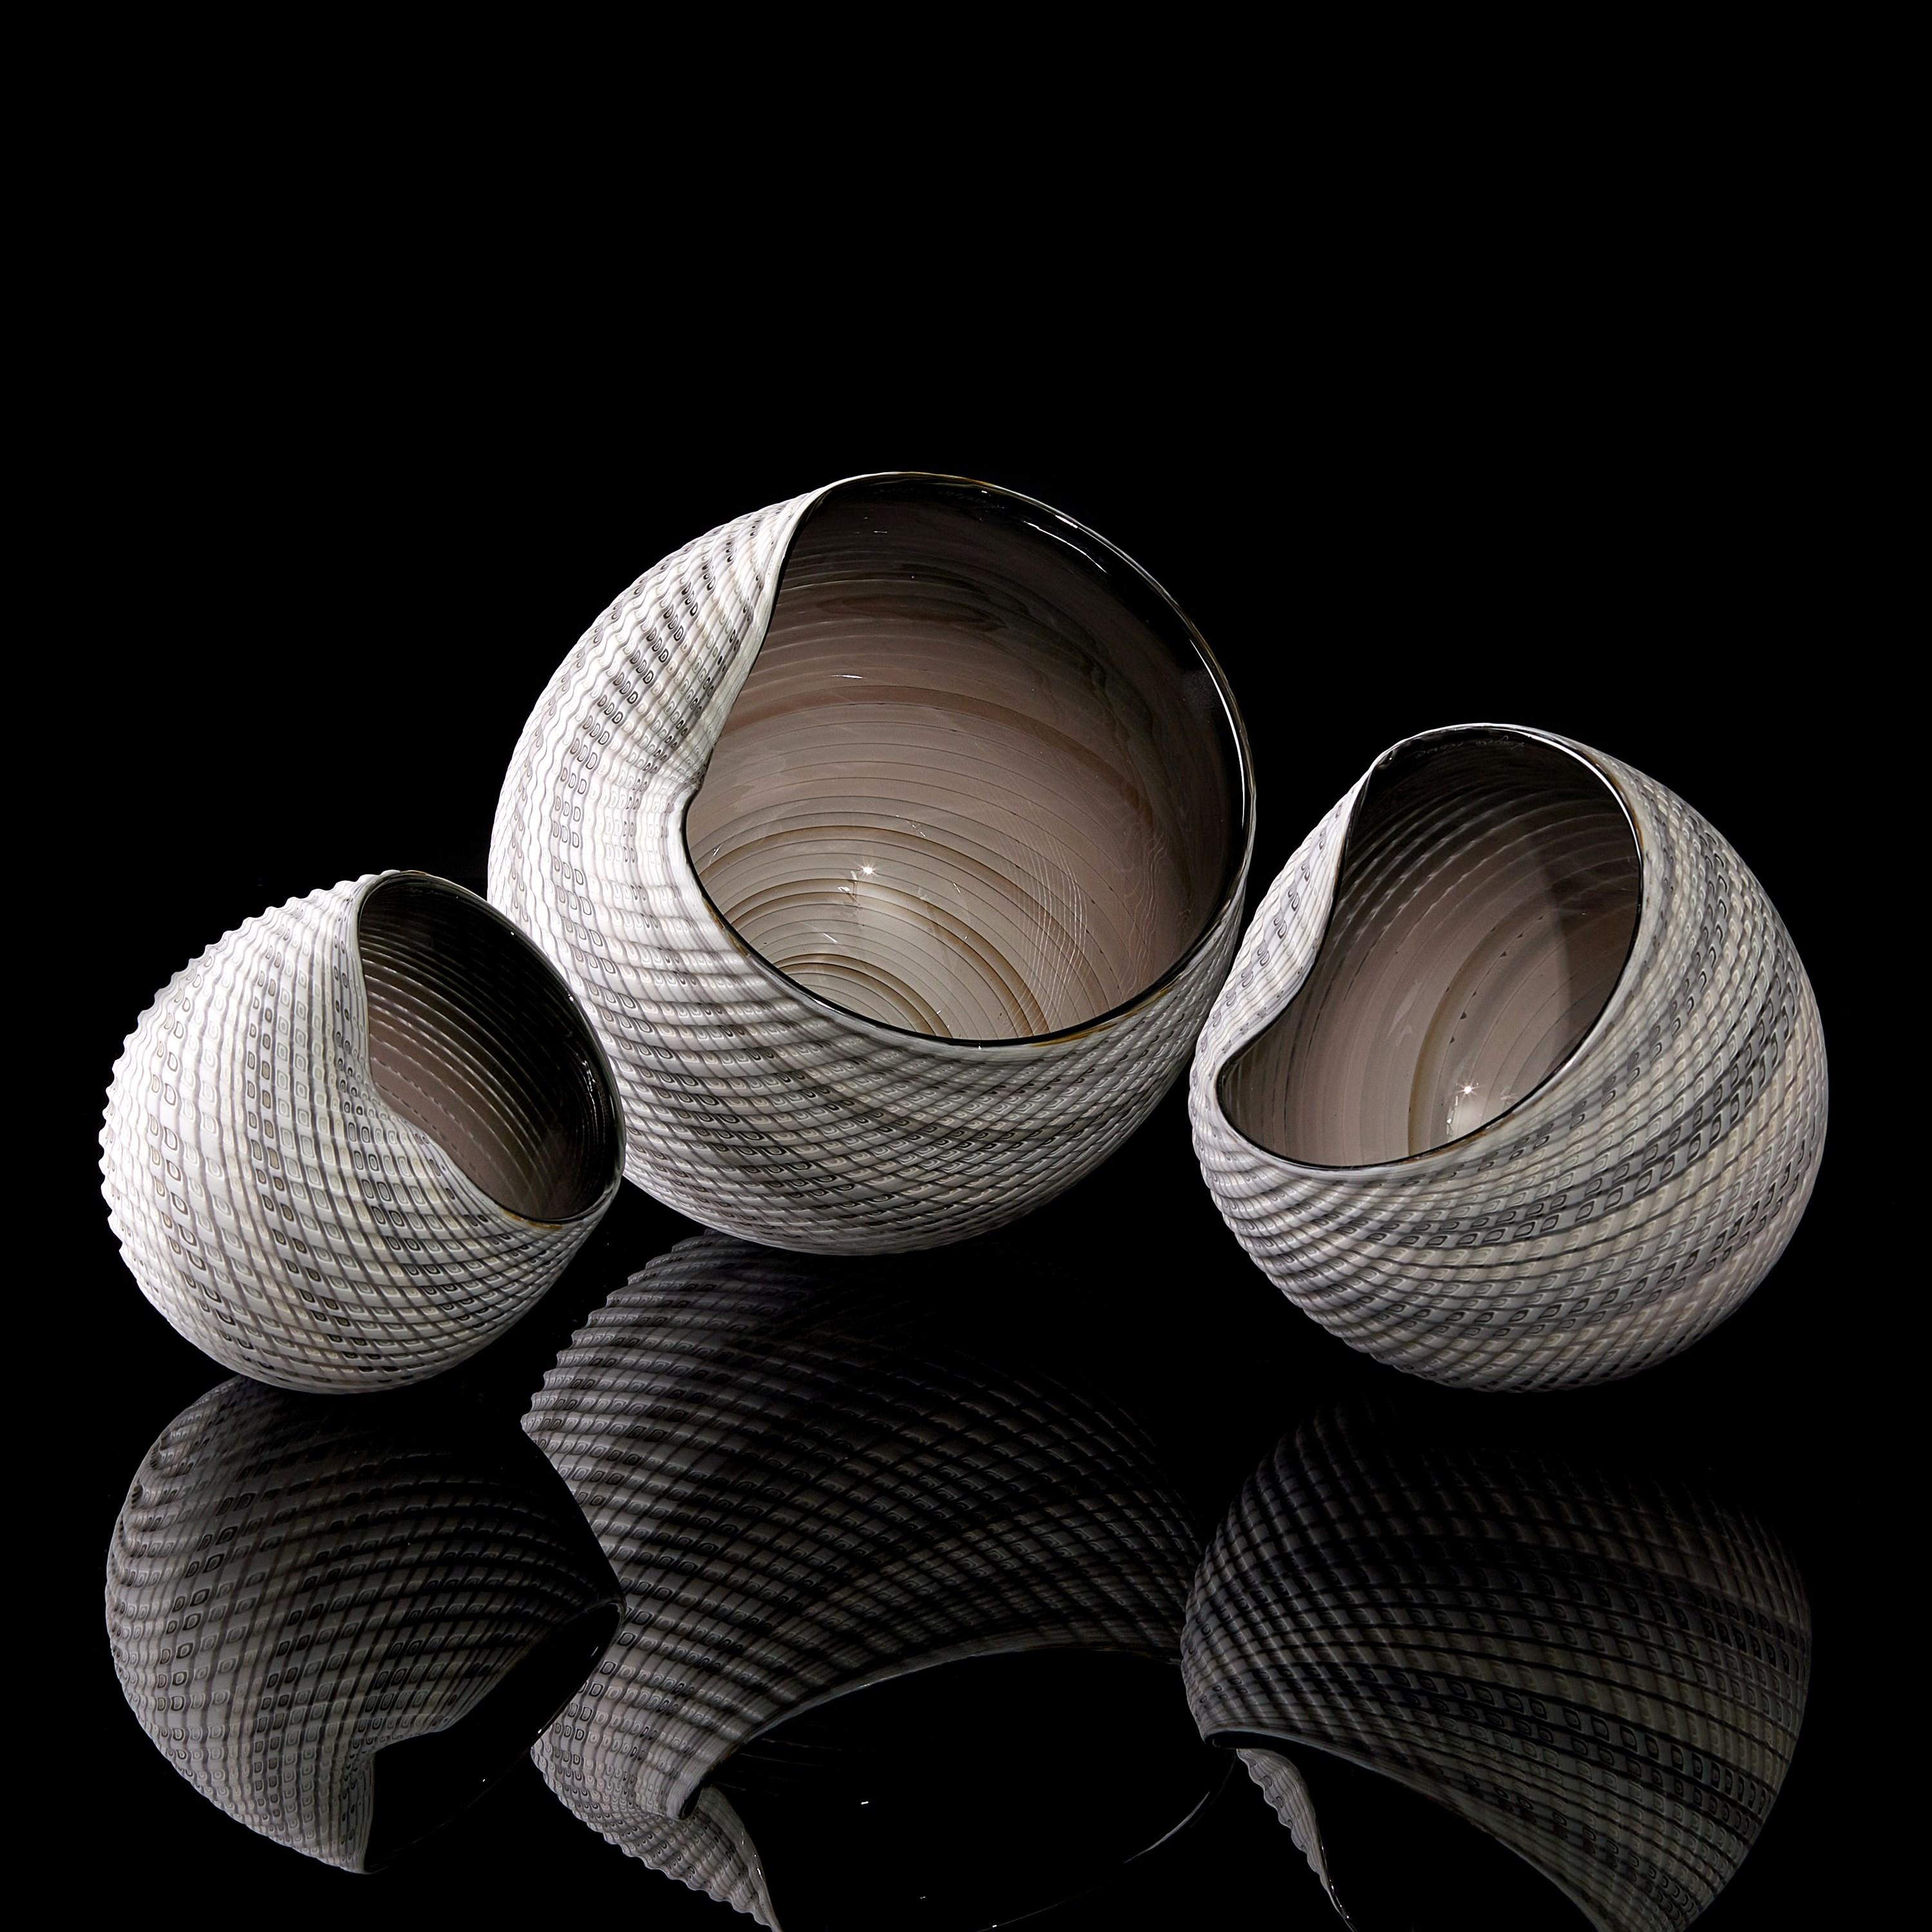 European Woven Mandala No 10, an Organic Textured Glass Sculptural Vessel by Layne Rowe